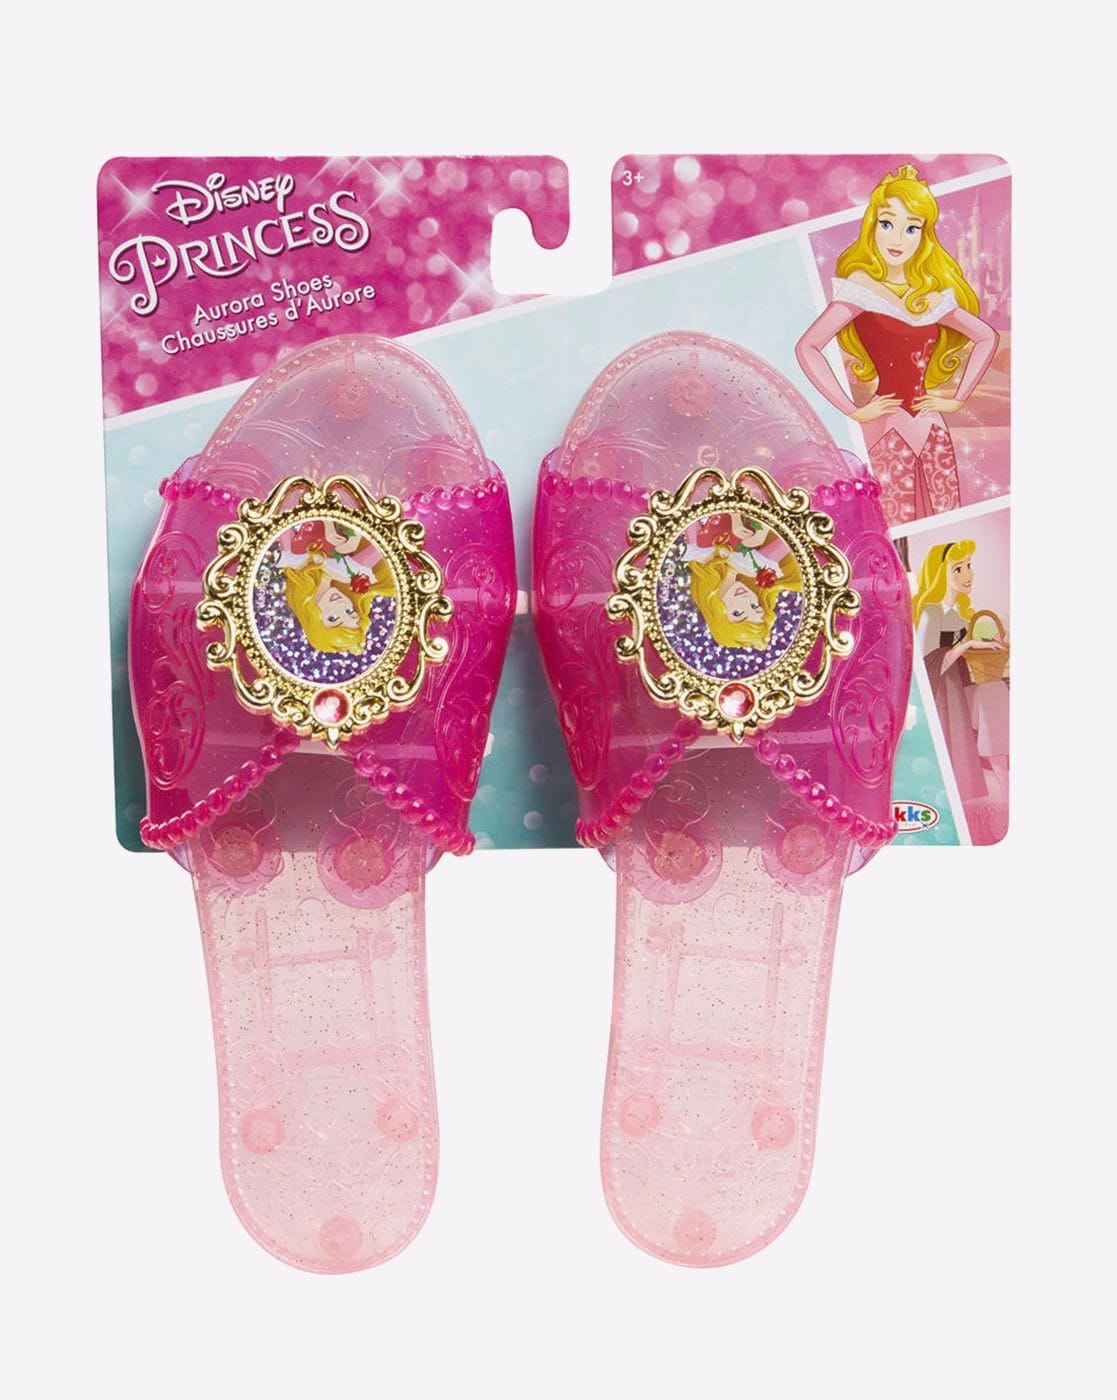 princess aurora shoes